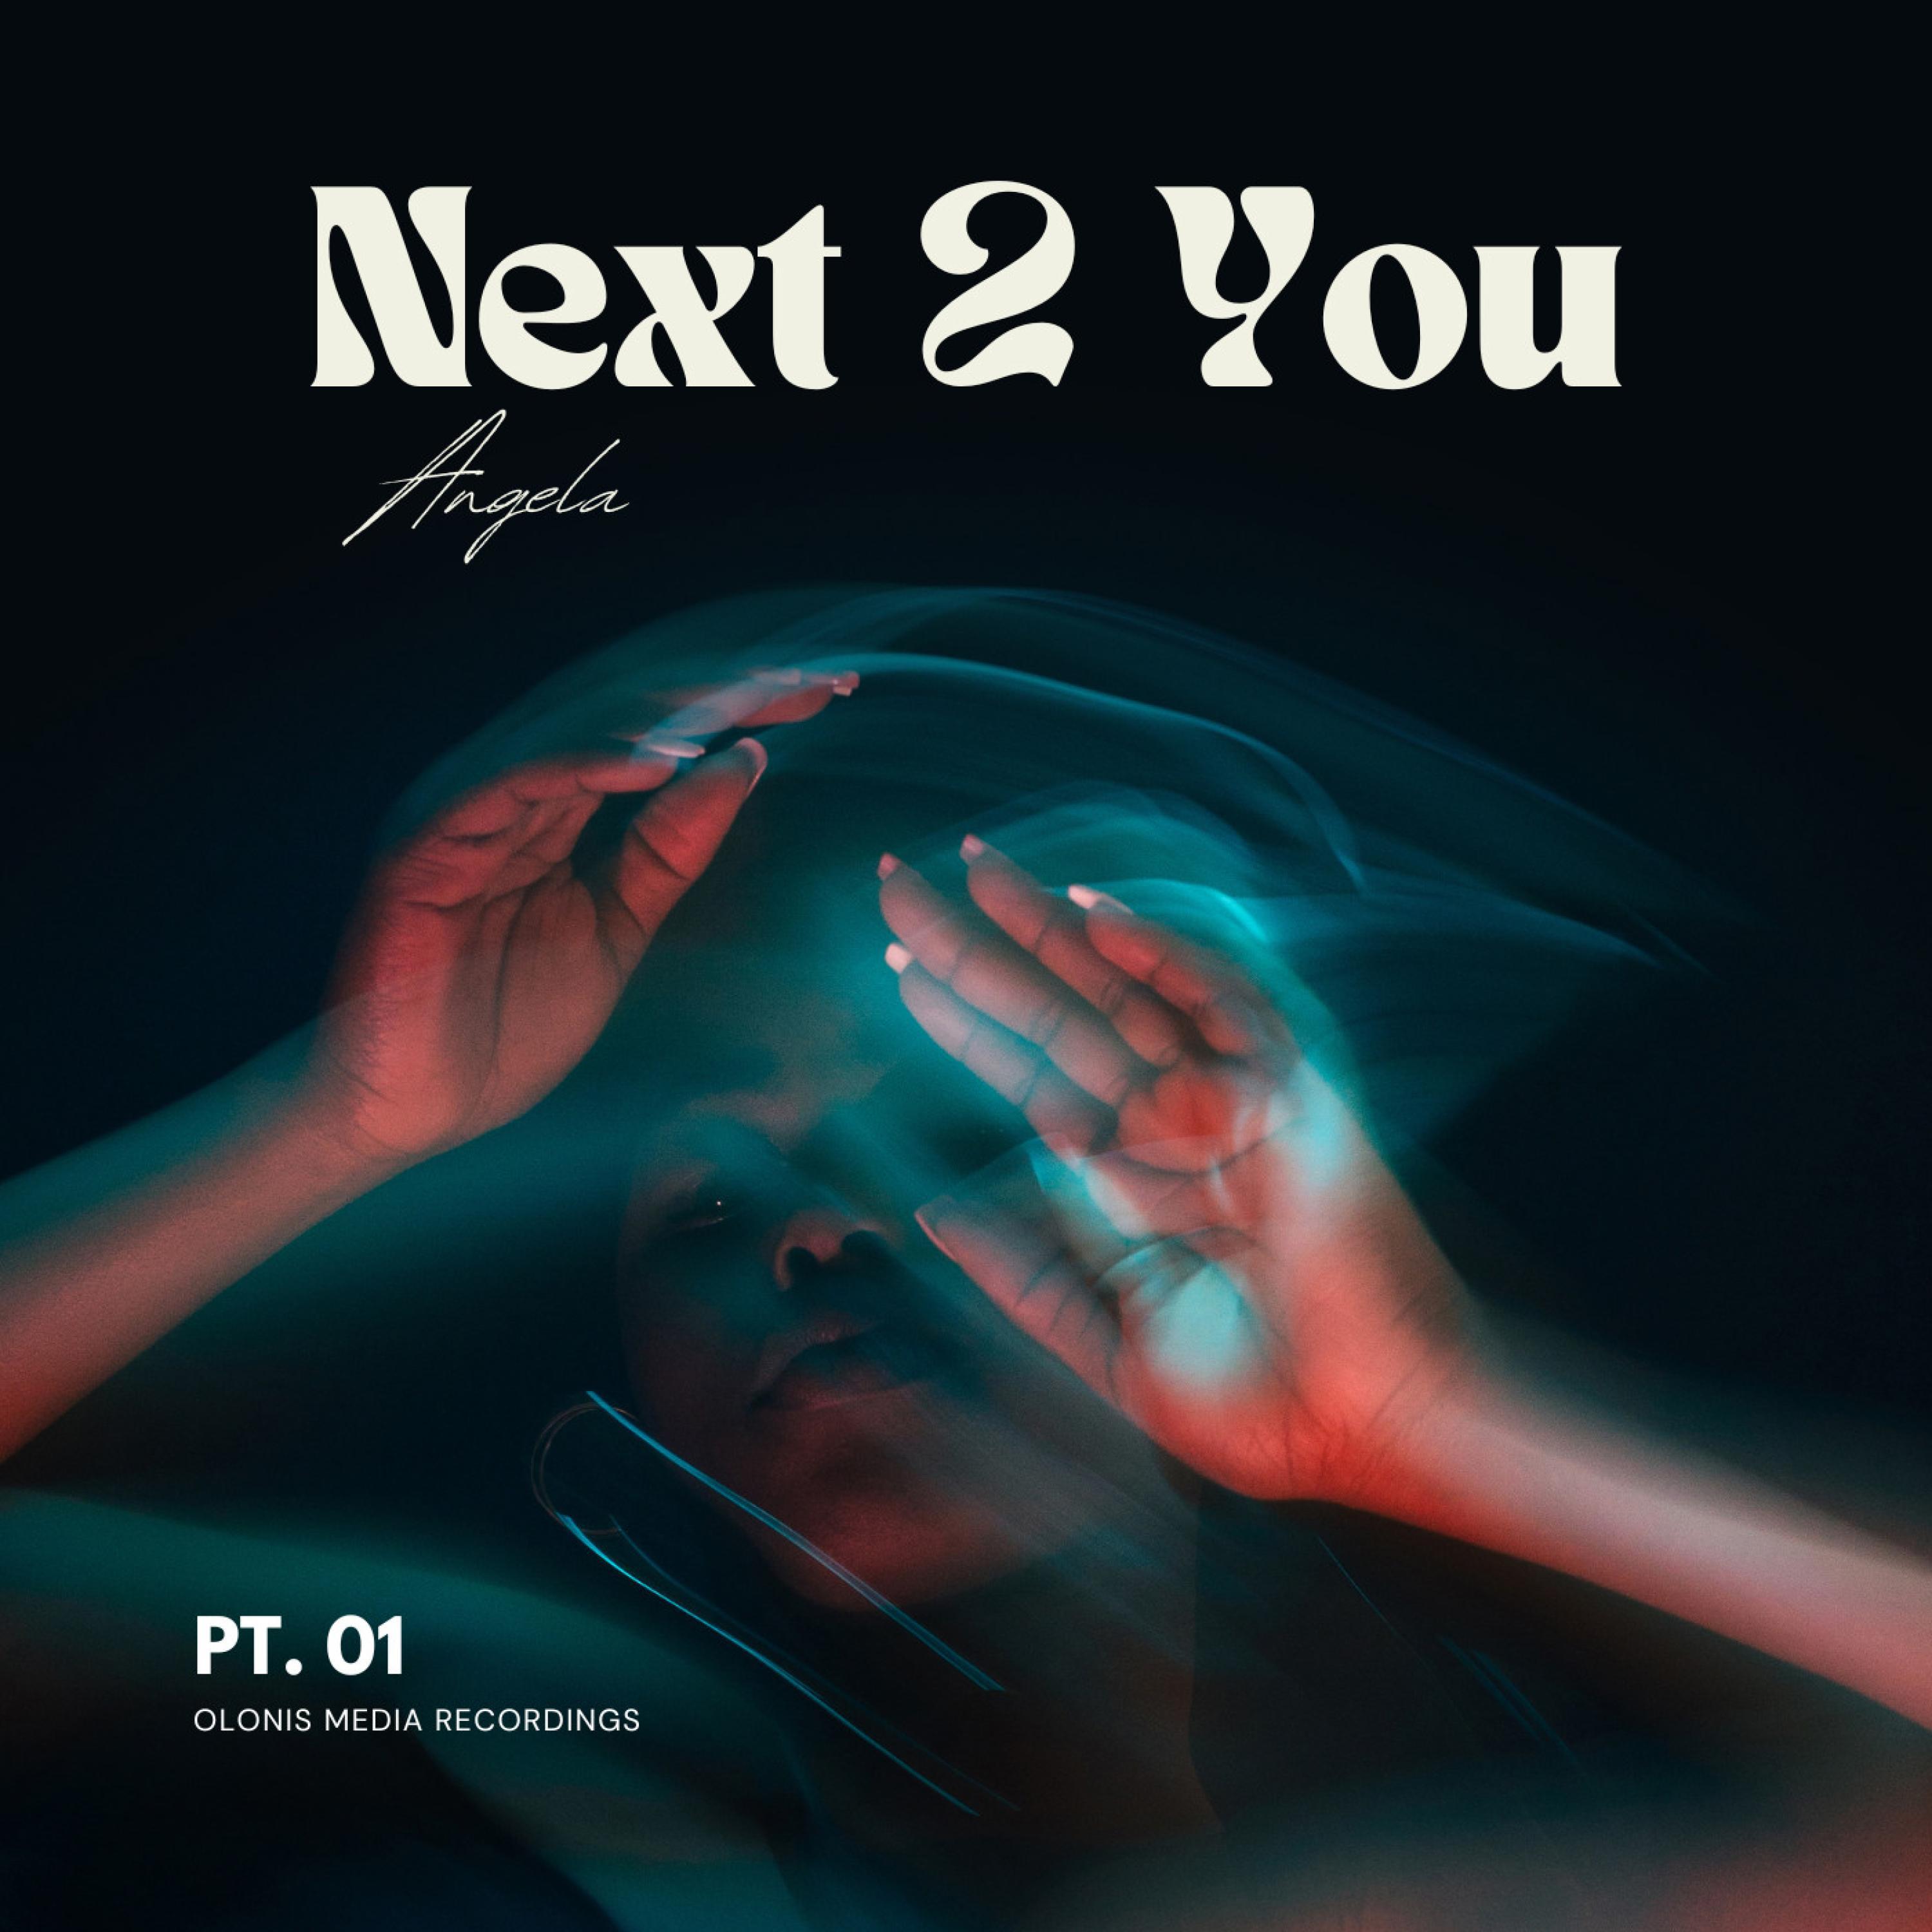 Bcu Productions - Next 2 You (feat. Angela)